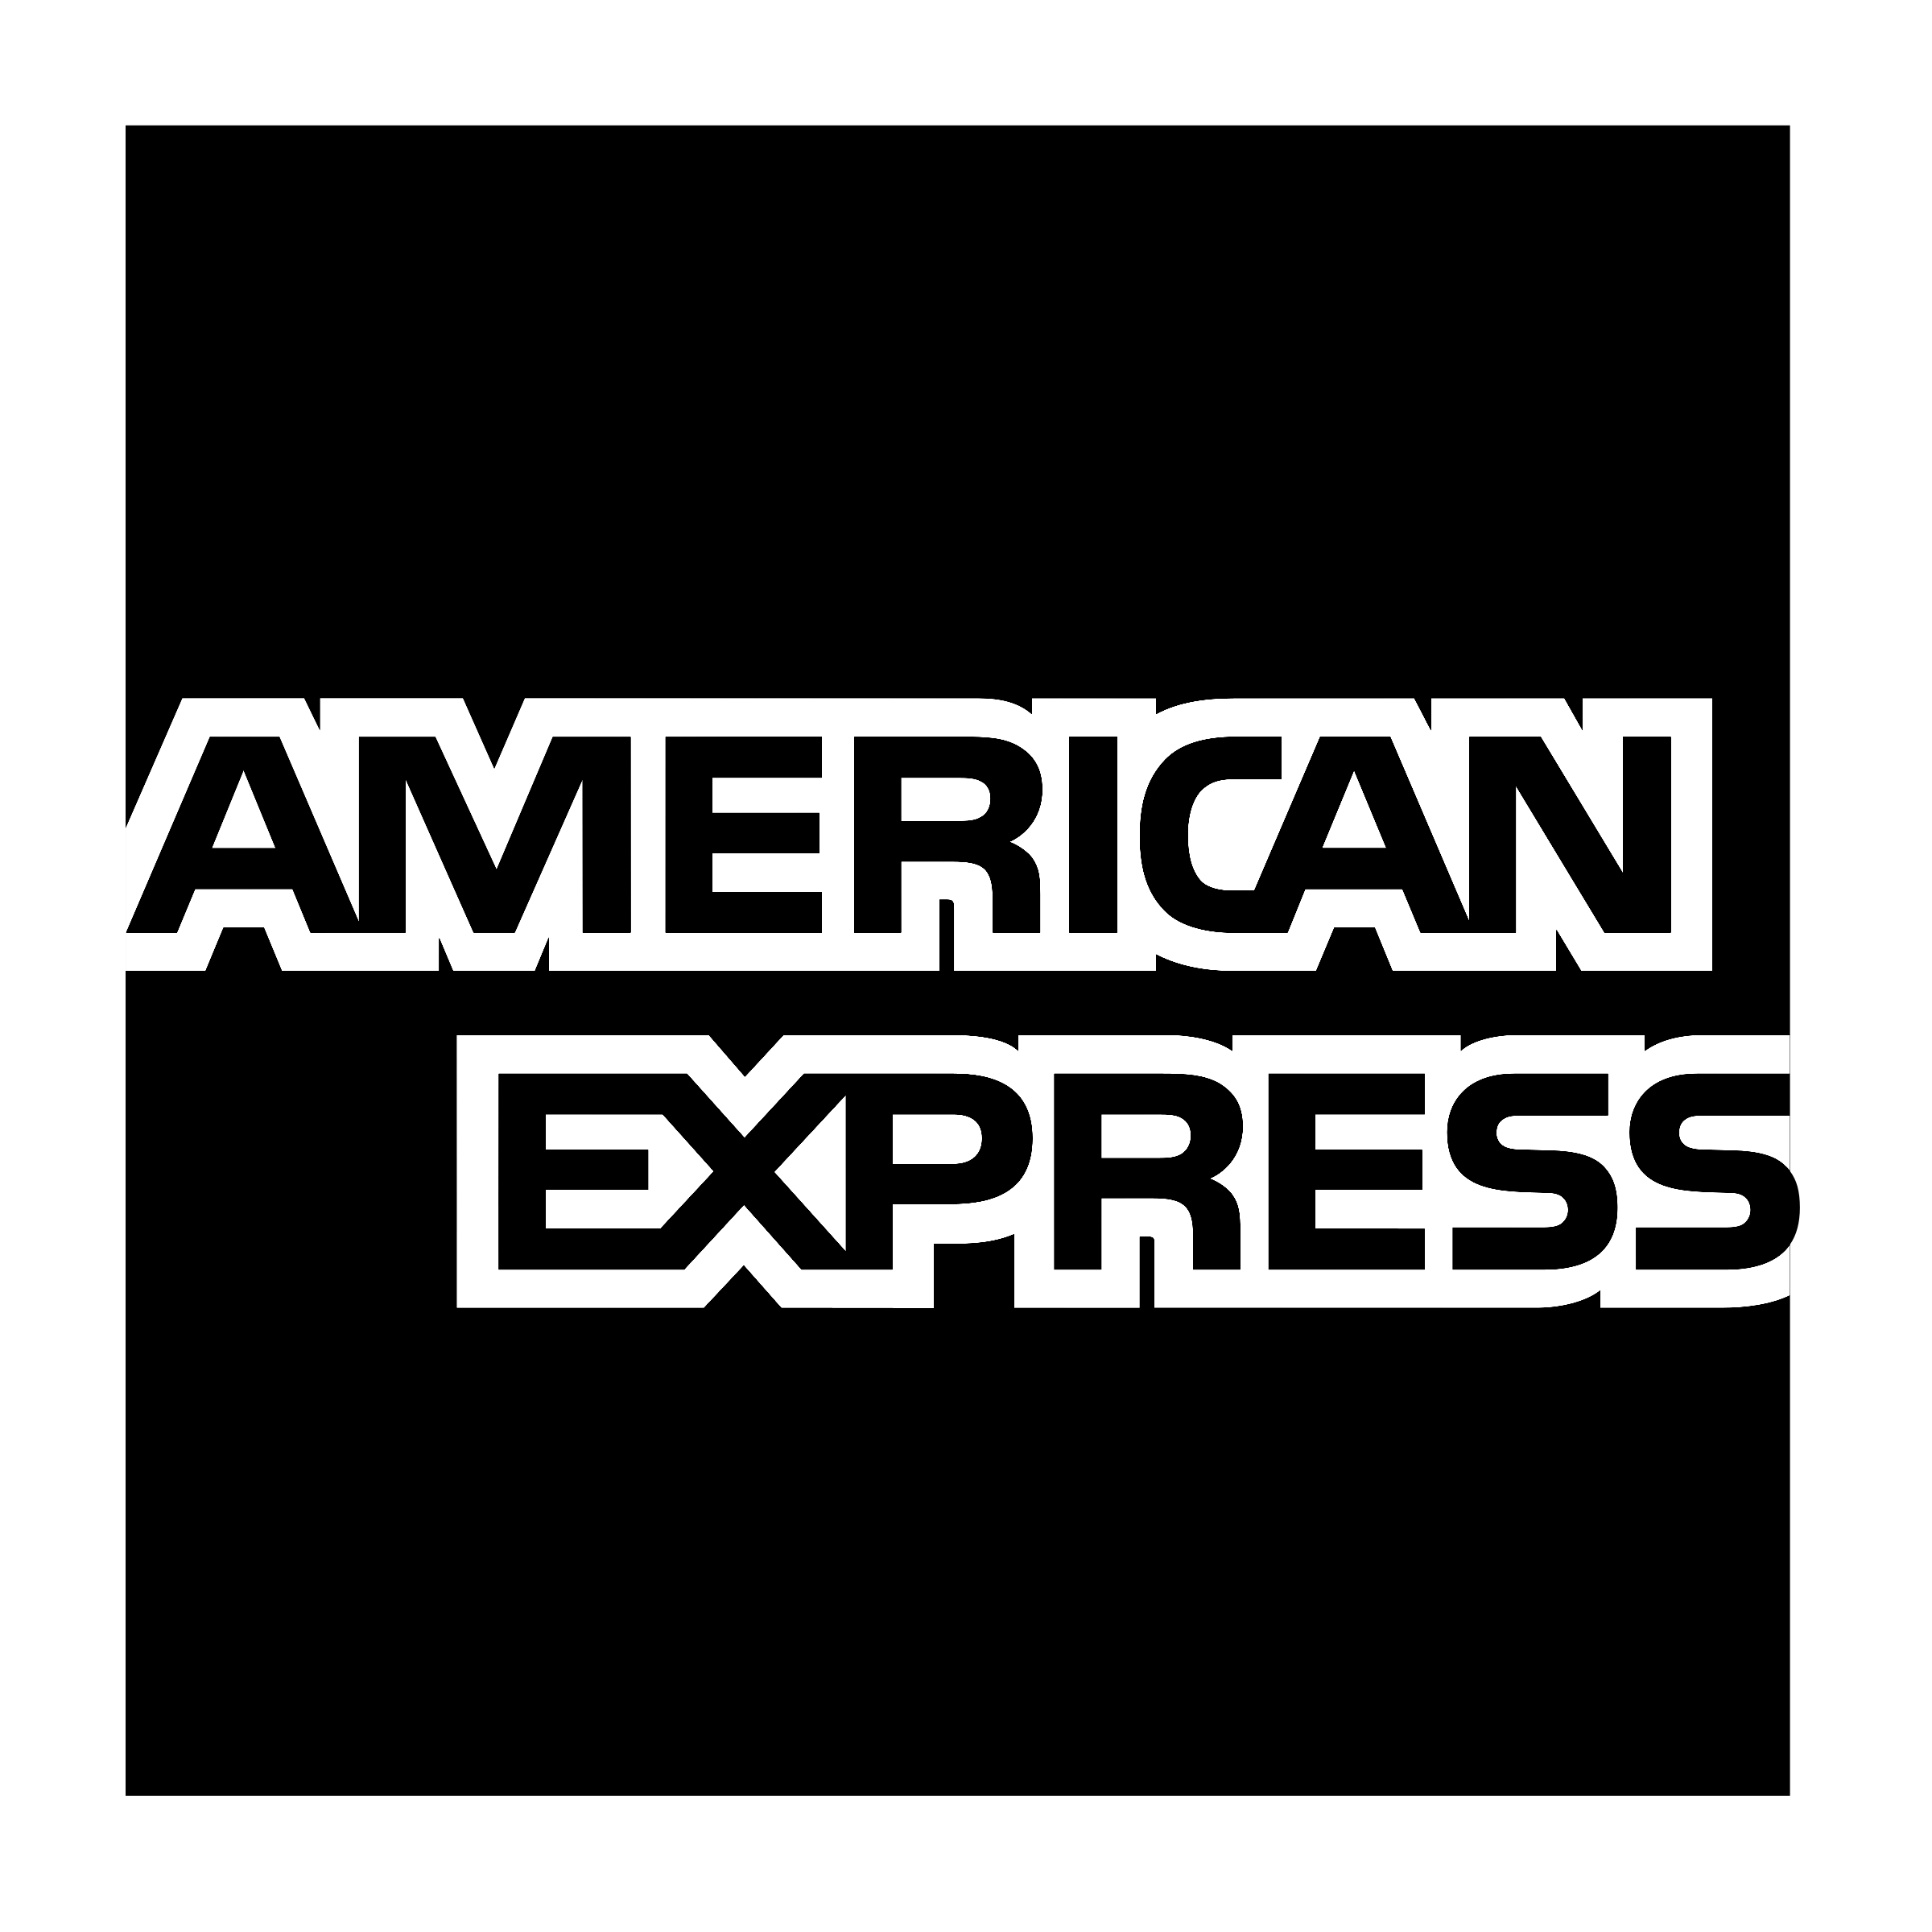 T me brand american express. Американ Американ экспресс. Американ экспресс логотип. Логотип Amex. American Express карта logo.